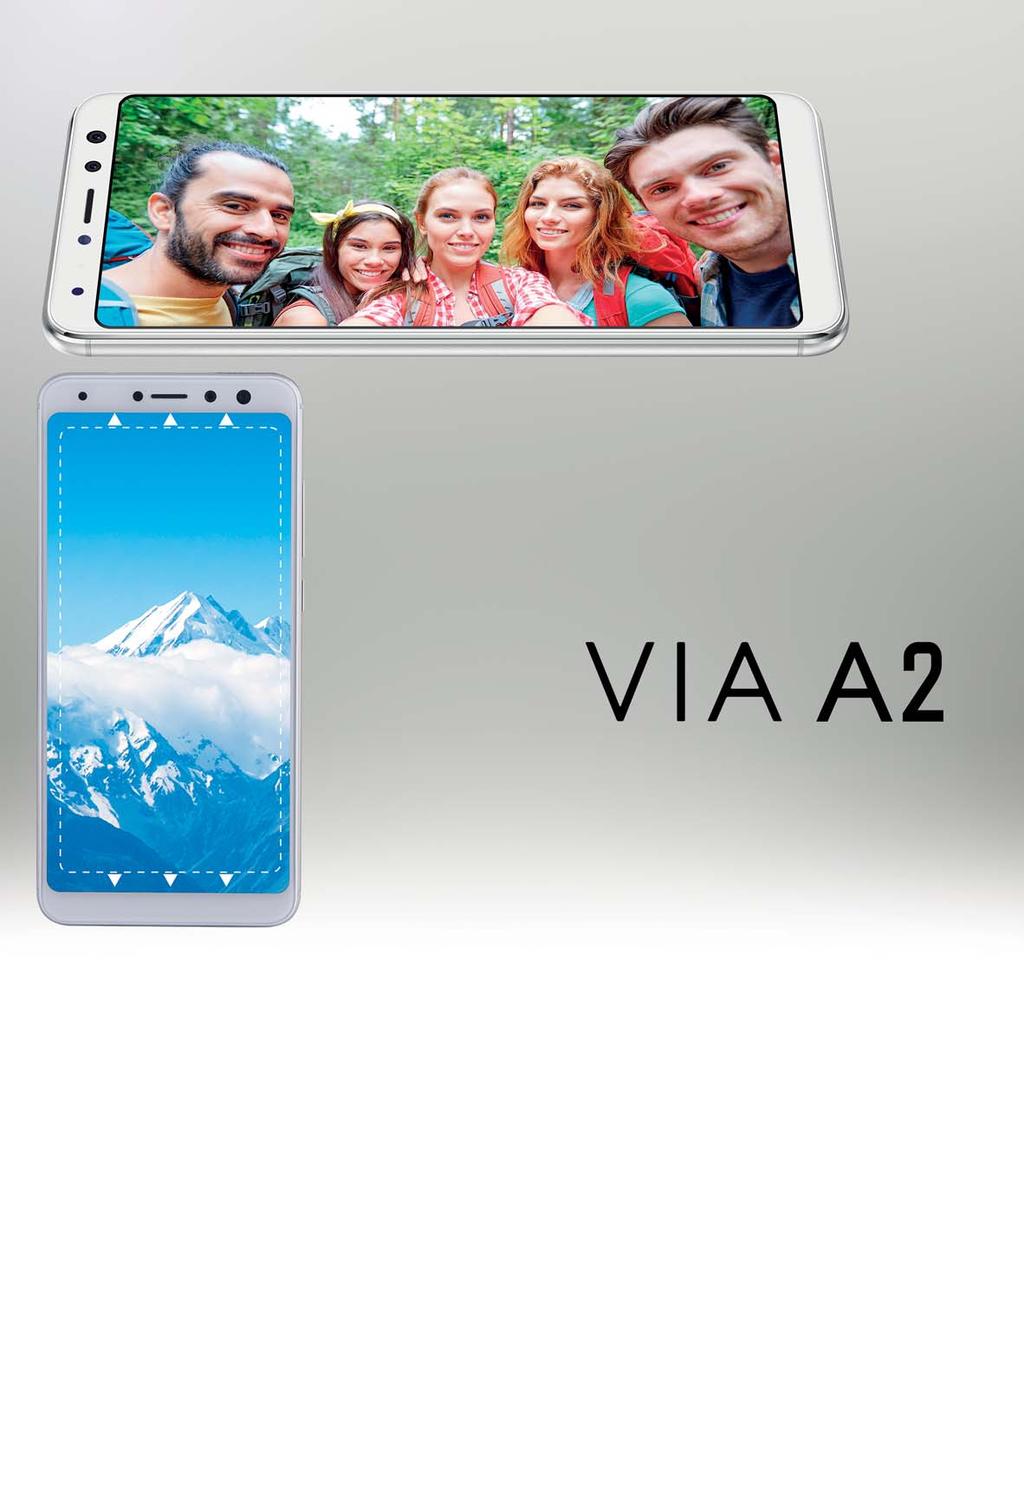 Casper VIA Akýllý Telefon Casper VIA Akýllý Telefon Casper VIA A2 Casper VIA F2 1.4 GHz MSM 8937 8 Çekirdek 2.5 GHz MT6757 8 Çekirdek Android Nougat 7.1.2 Android Nougat 7.0 5.7 IPS HD+, 1440x720 6.